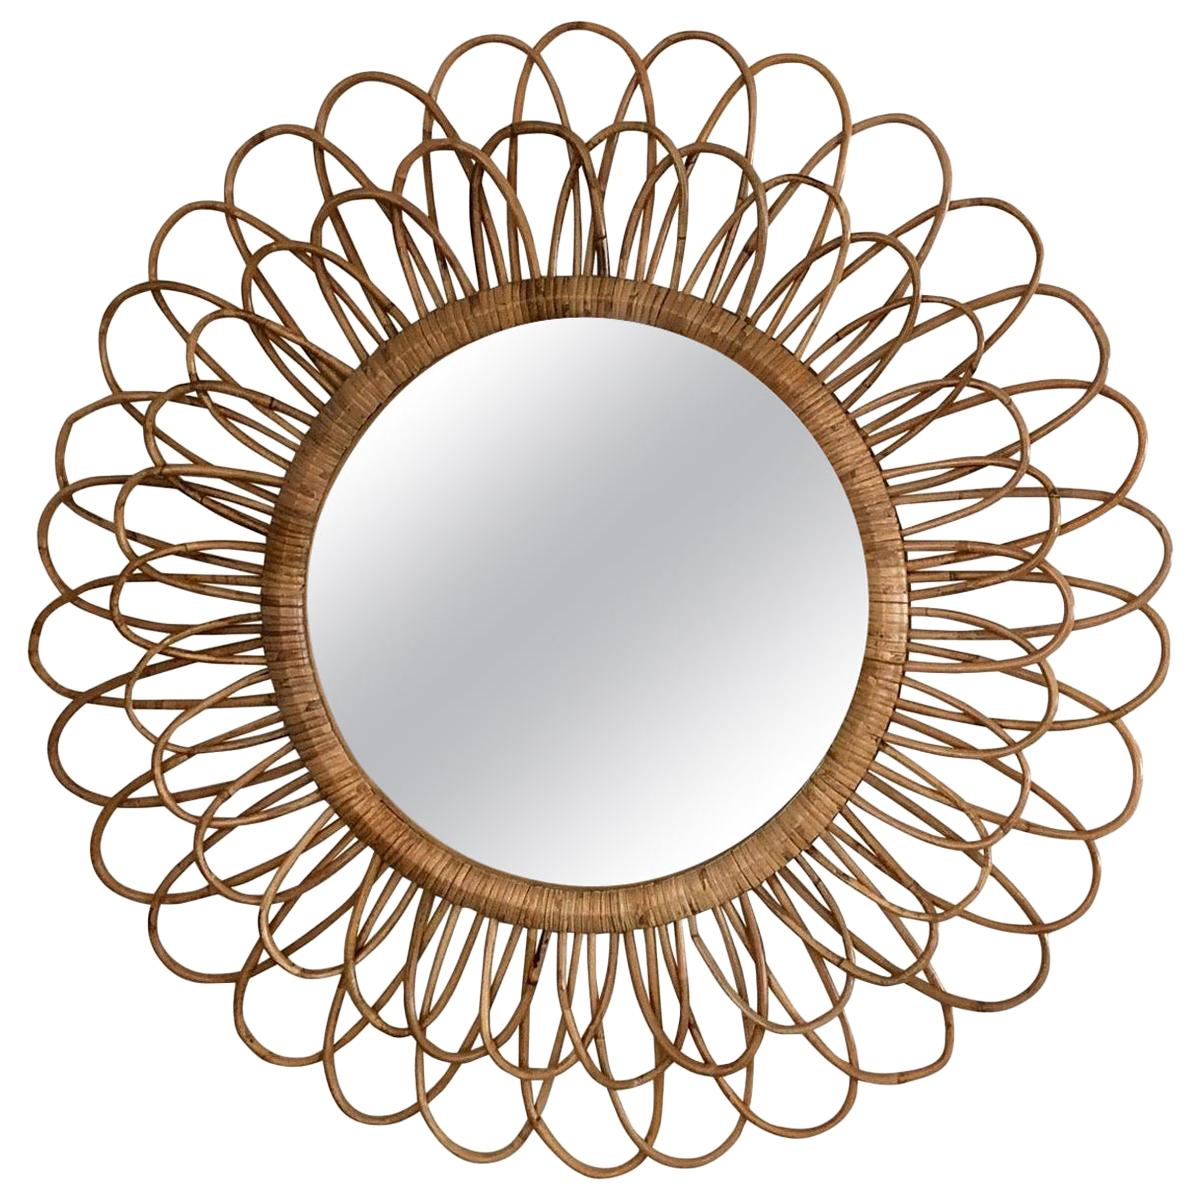 Woven Rattan Sunburst Round Mirror